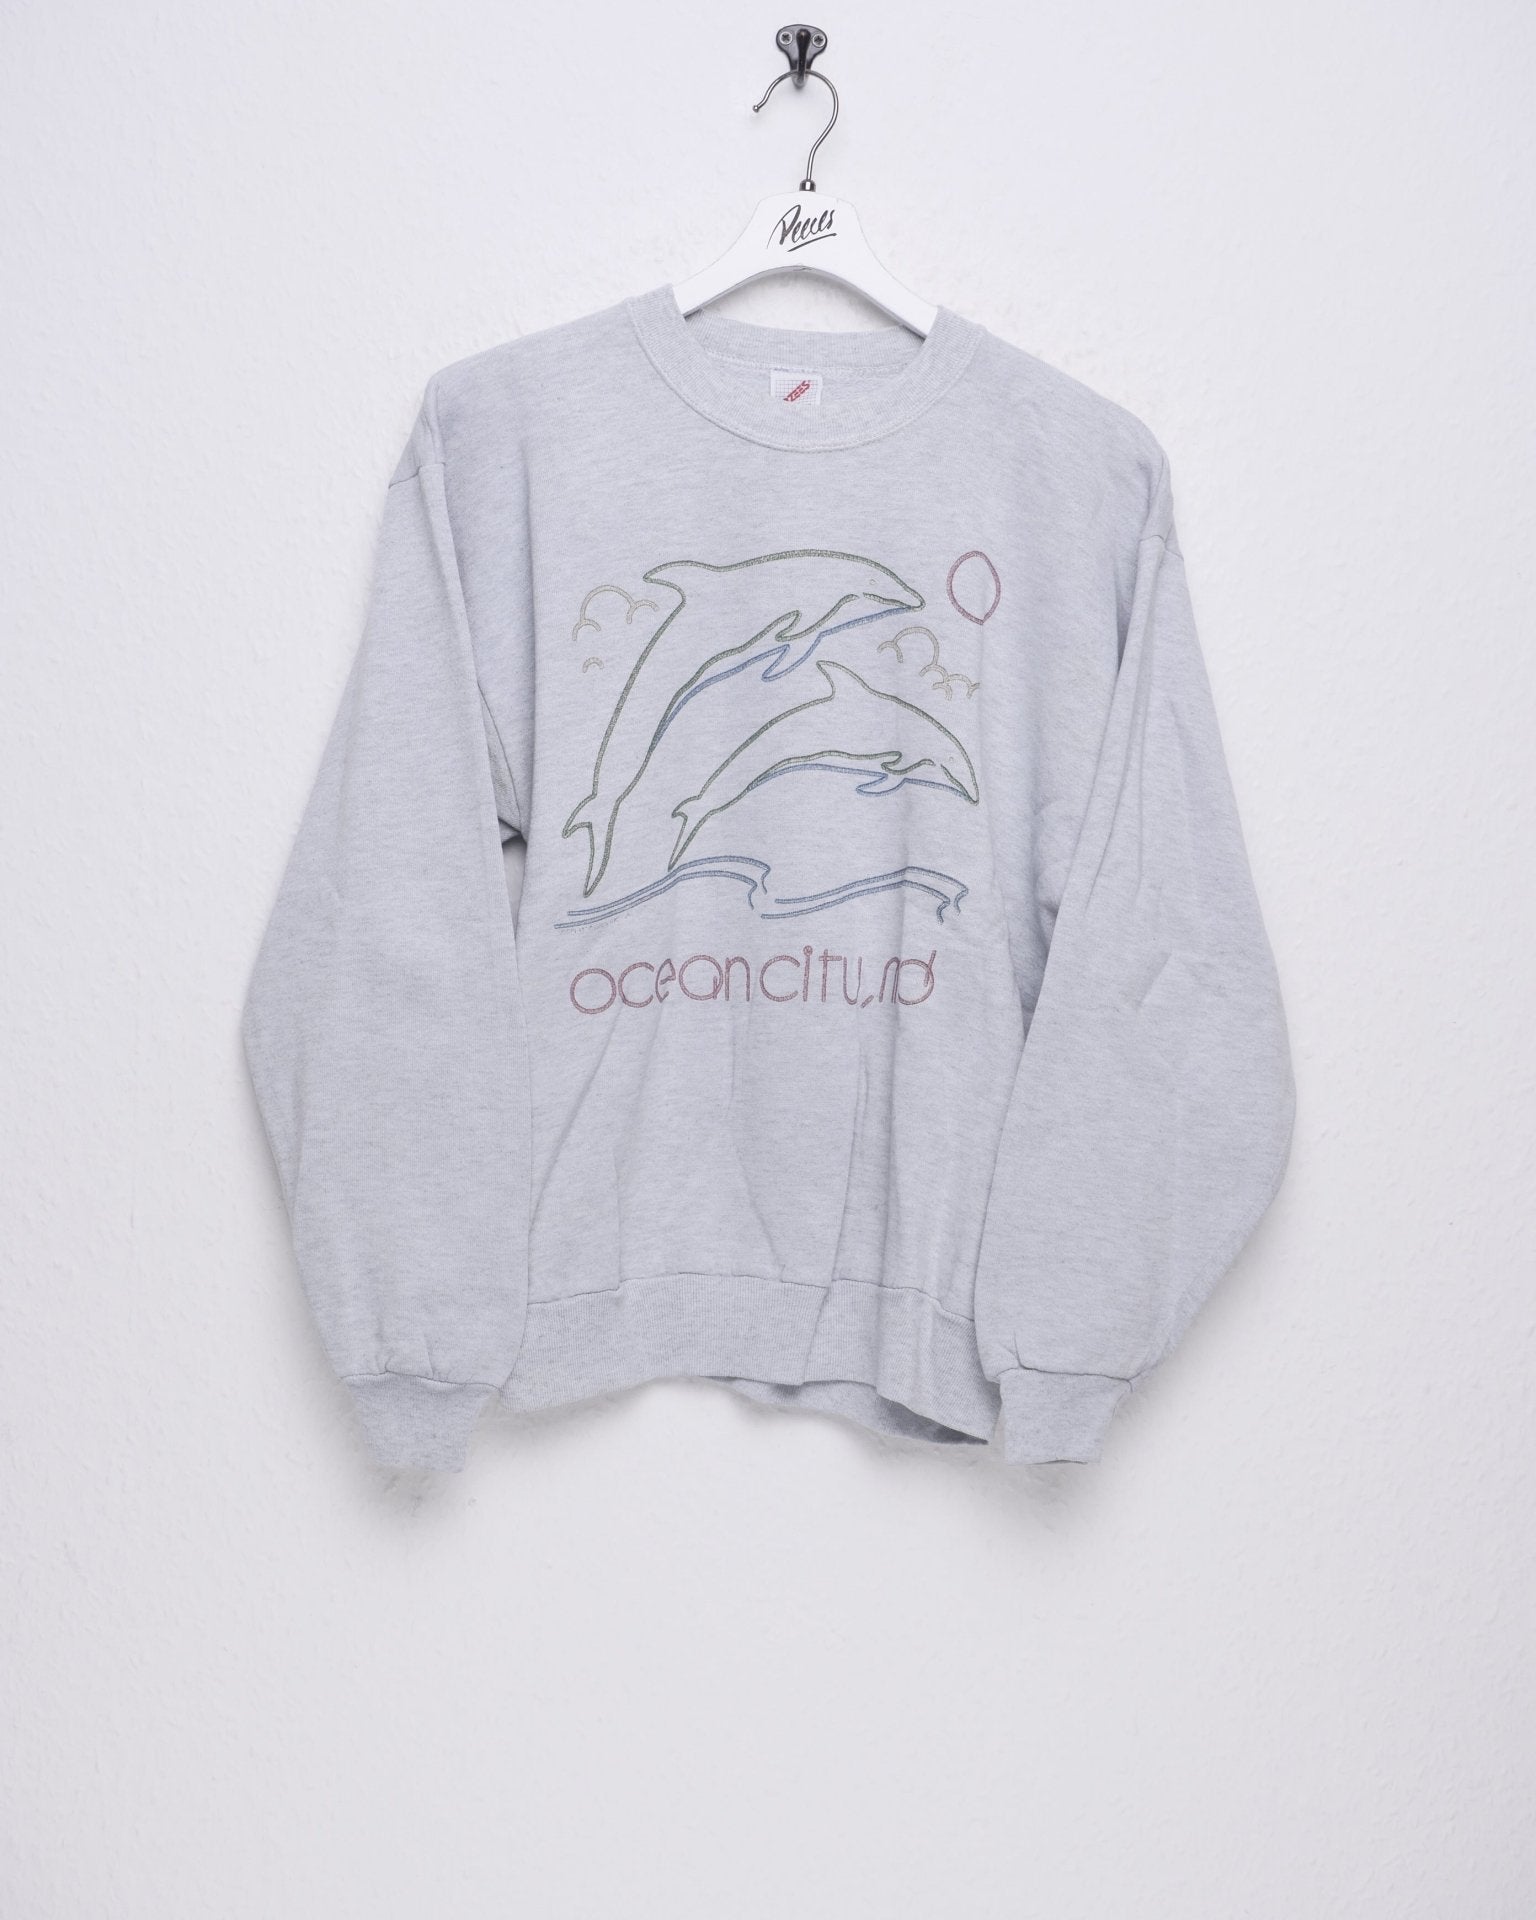 Ocean City printed Logo Vintage Sweater - Peeces